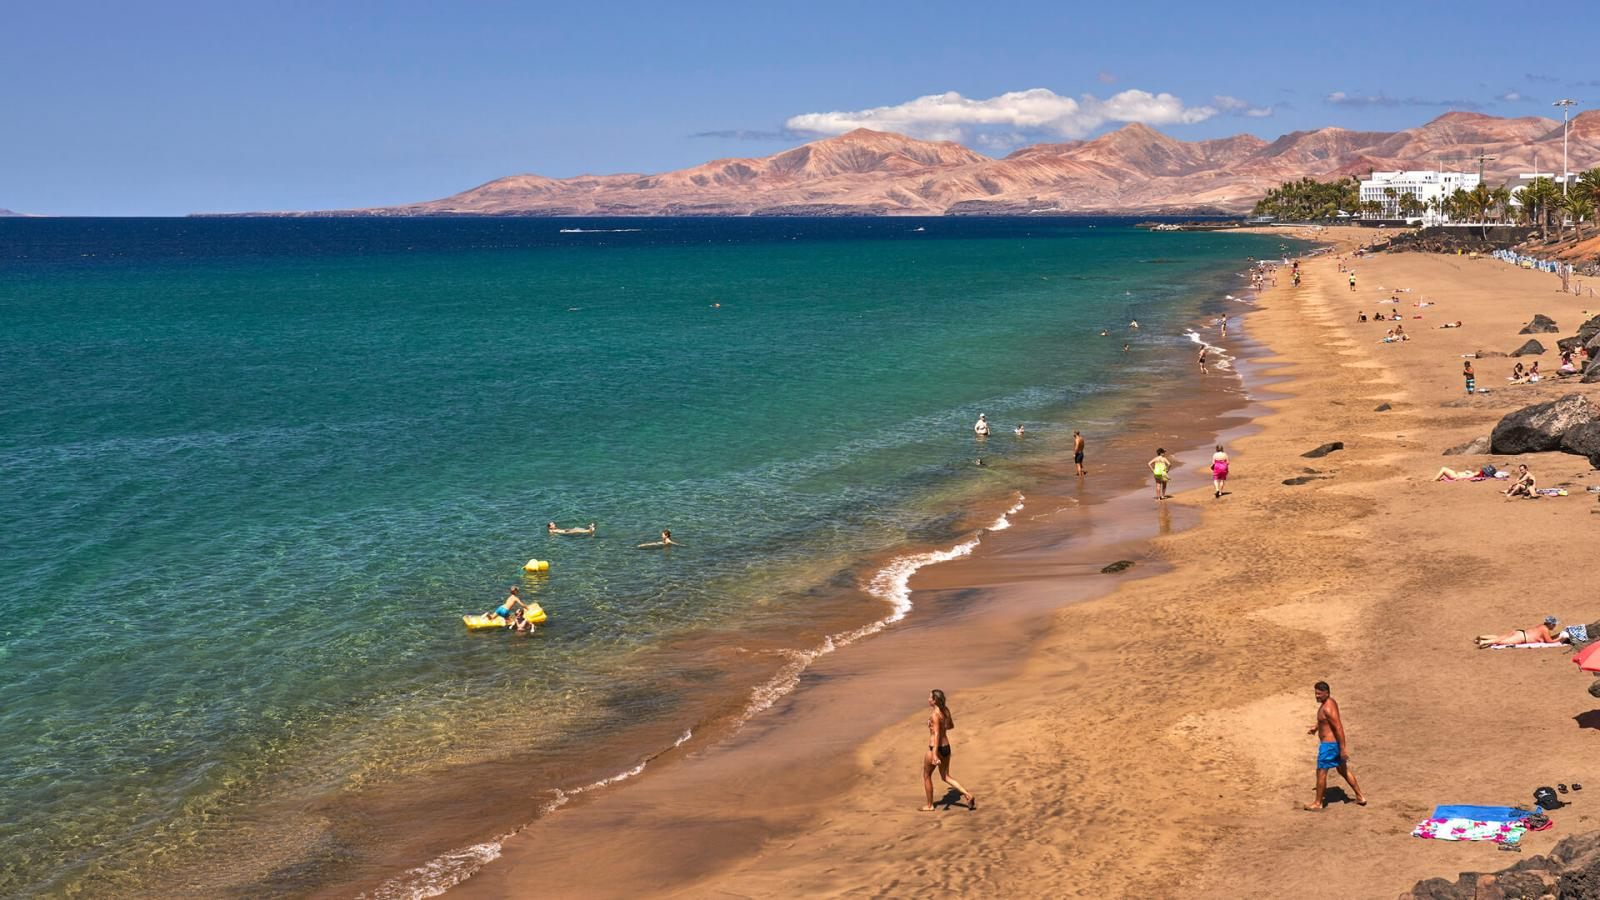 Playa Grande boasts an irresistible Caribean vibe. - Hello Canary Islands